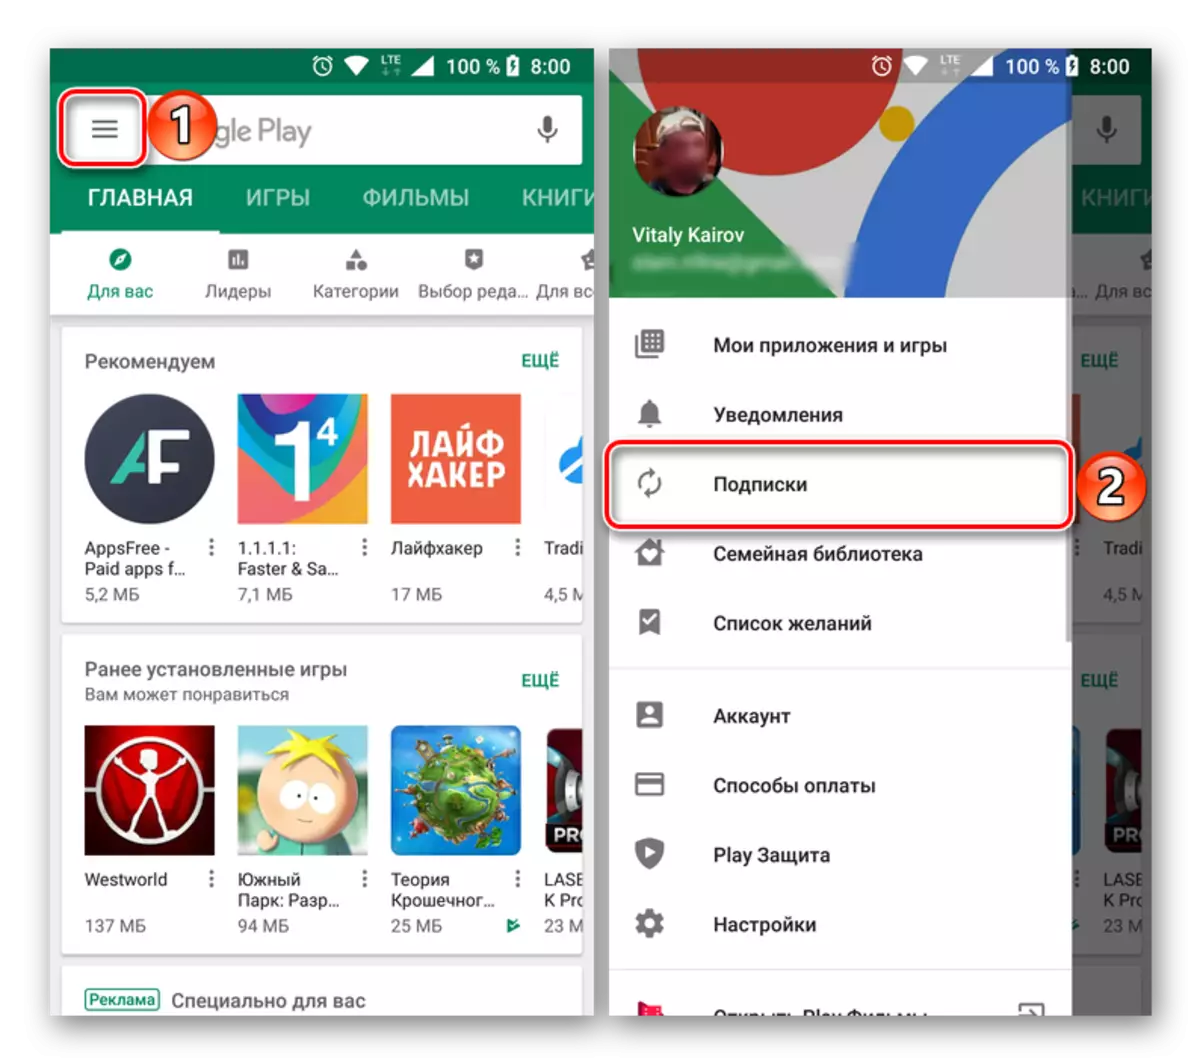 Android లో Google Play మార్కెట్లో విభాగం సభ్యత్వానికి వెళ్లండి